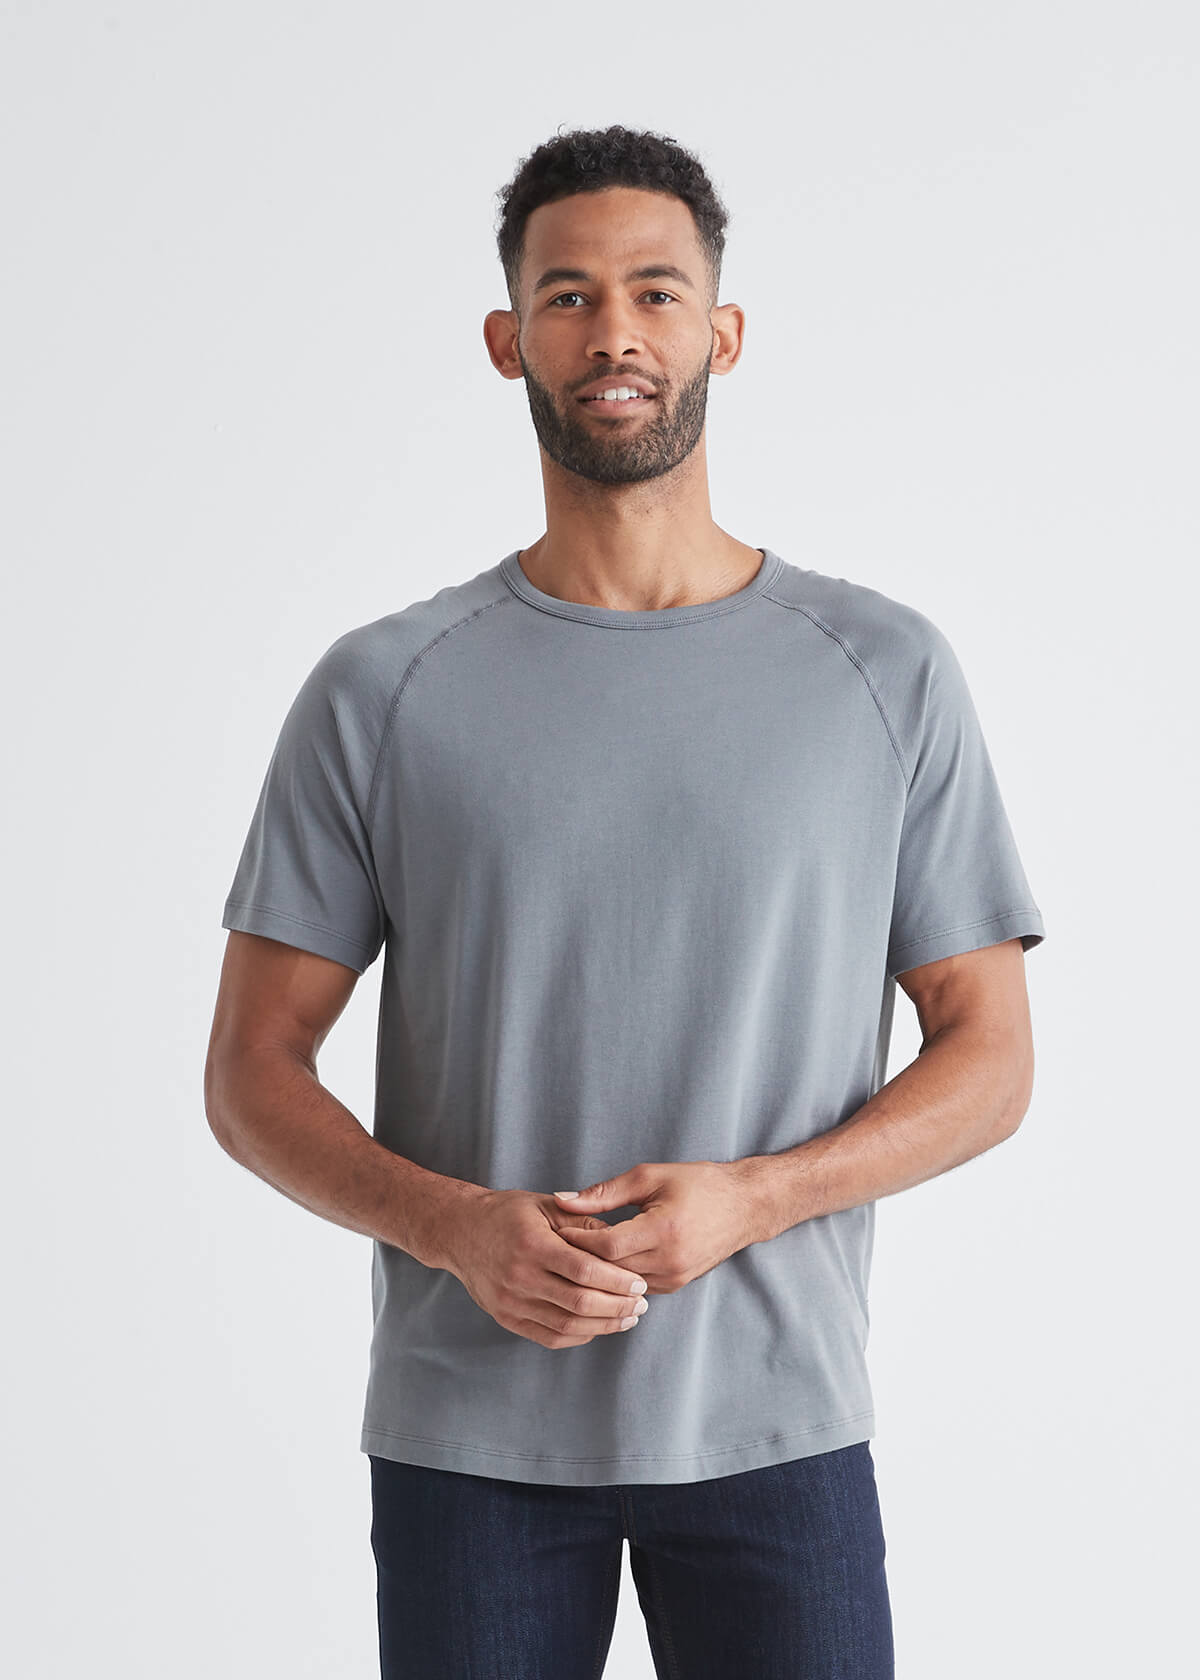 mens grey soft midweight t-shirt front-facing